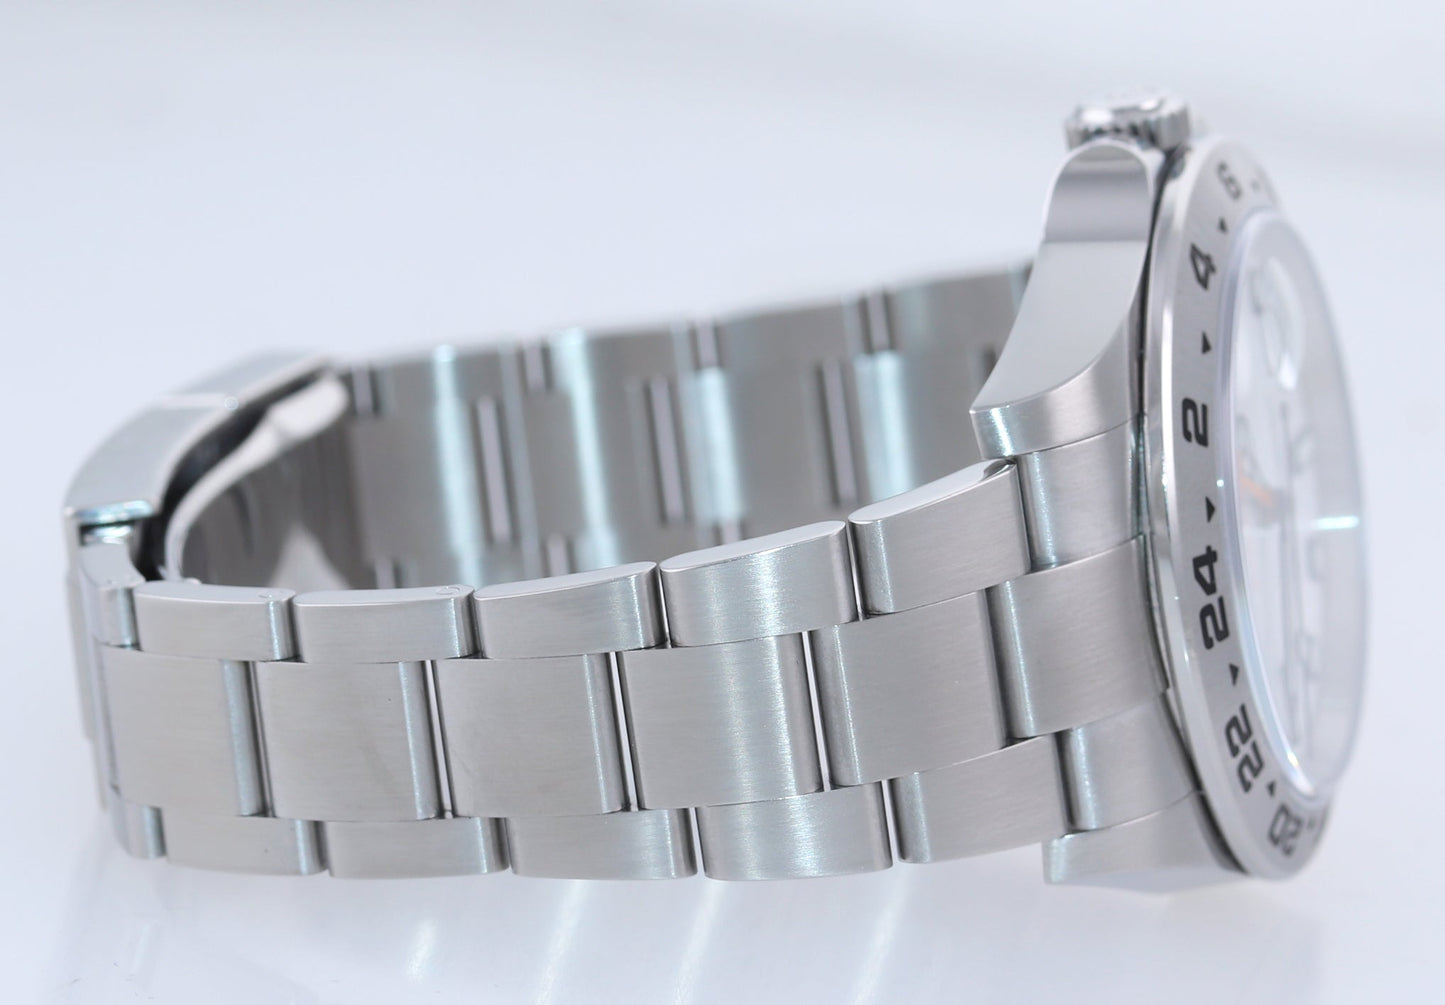 MINT 2020 Rolex Explorer II 42mm 216570 Polar White Dial Steel Watch Box